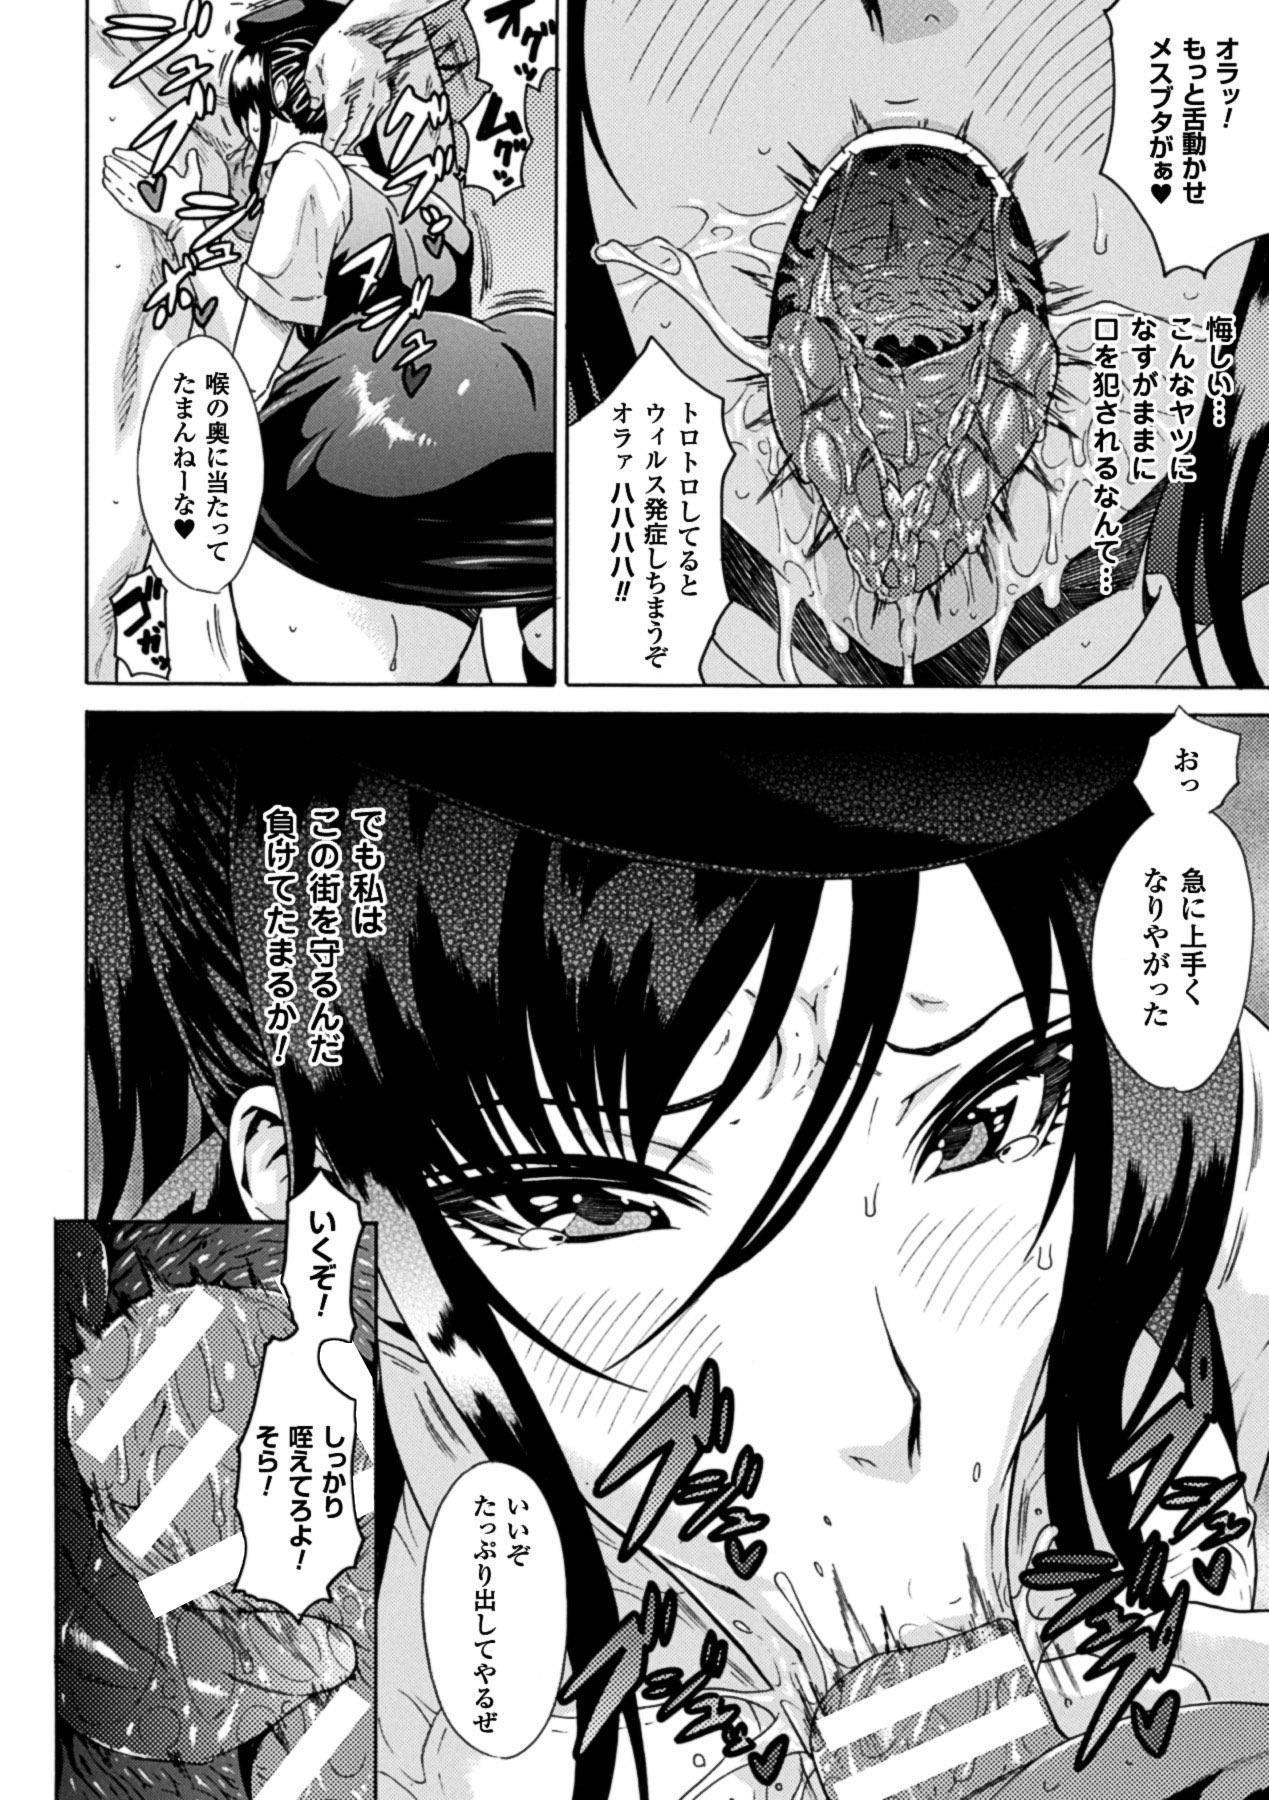 Kachiki na Onna ga Buzama na Ahegao o Sarasu made - Until Unyielding Women Exposes An Awkward Expression 31